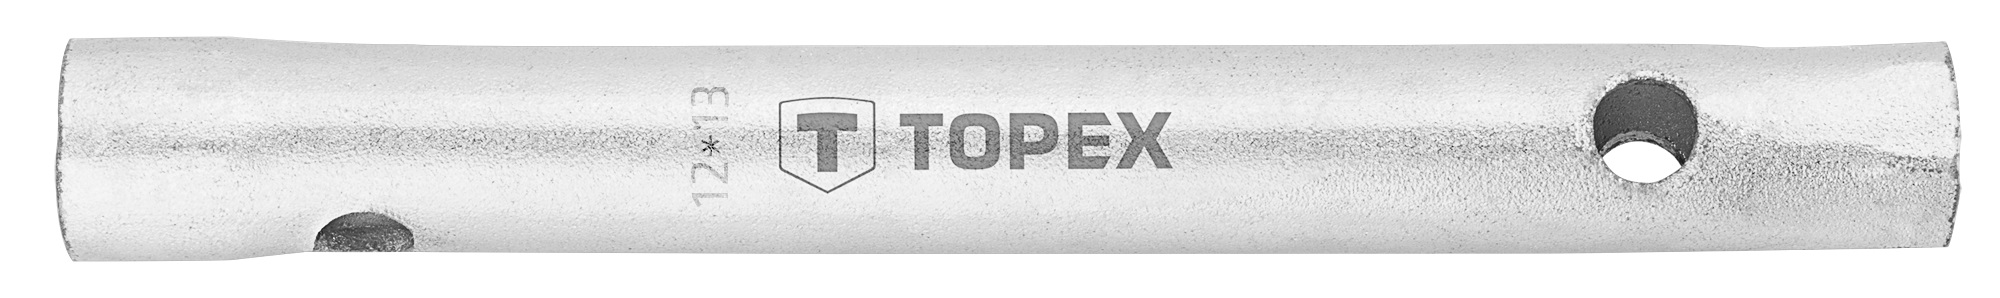 Topex 35D933